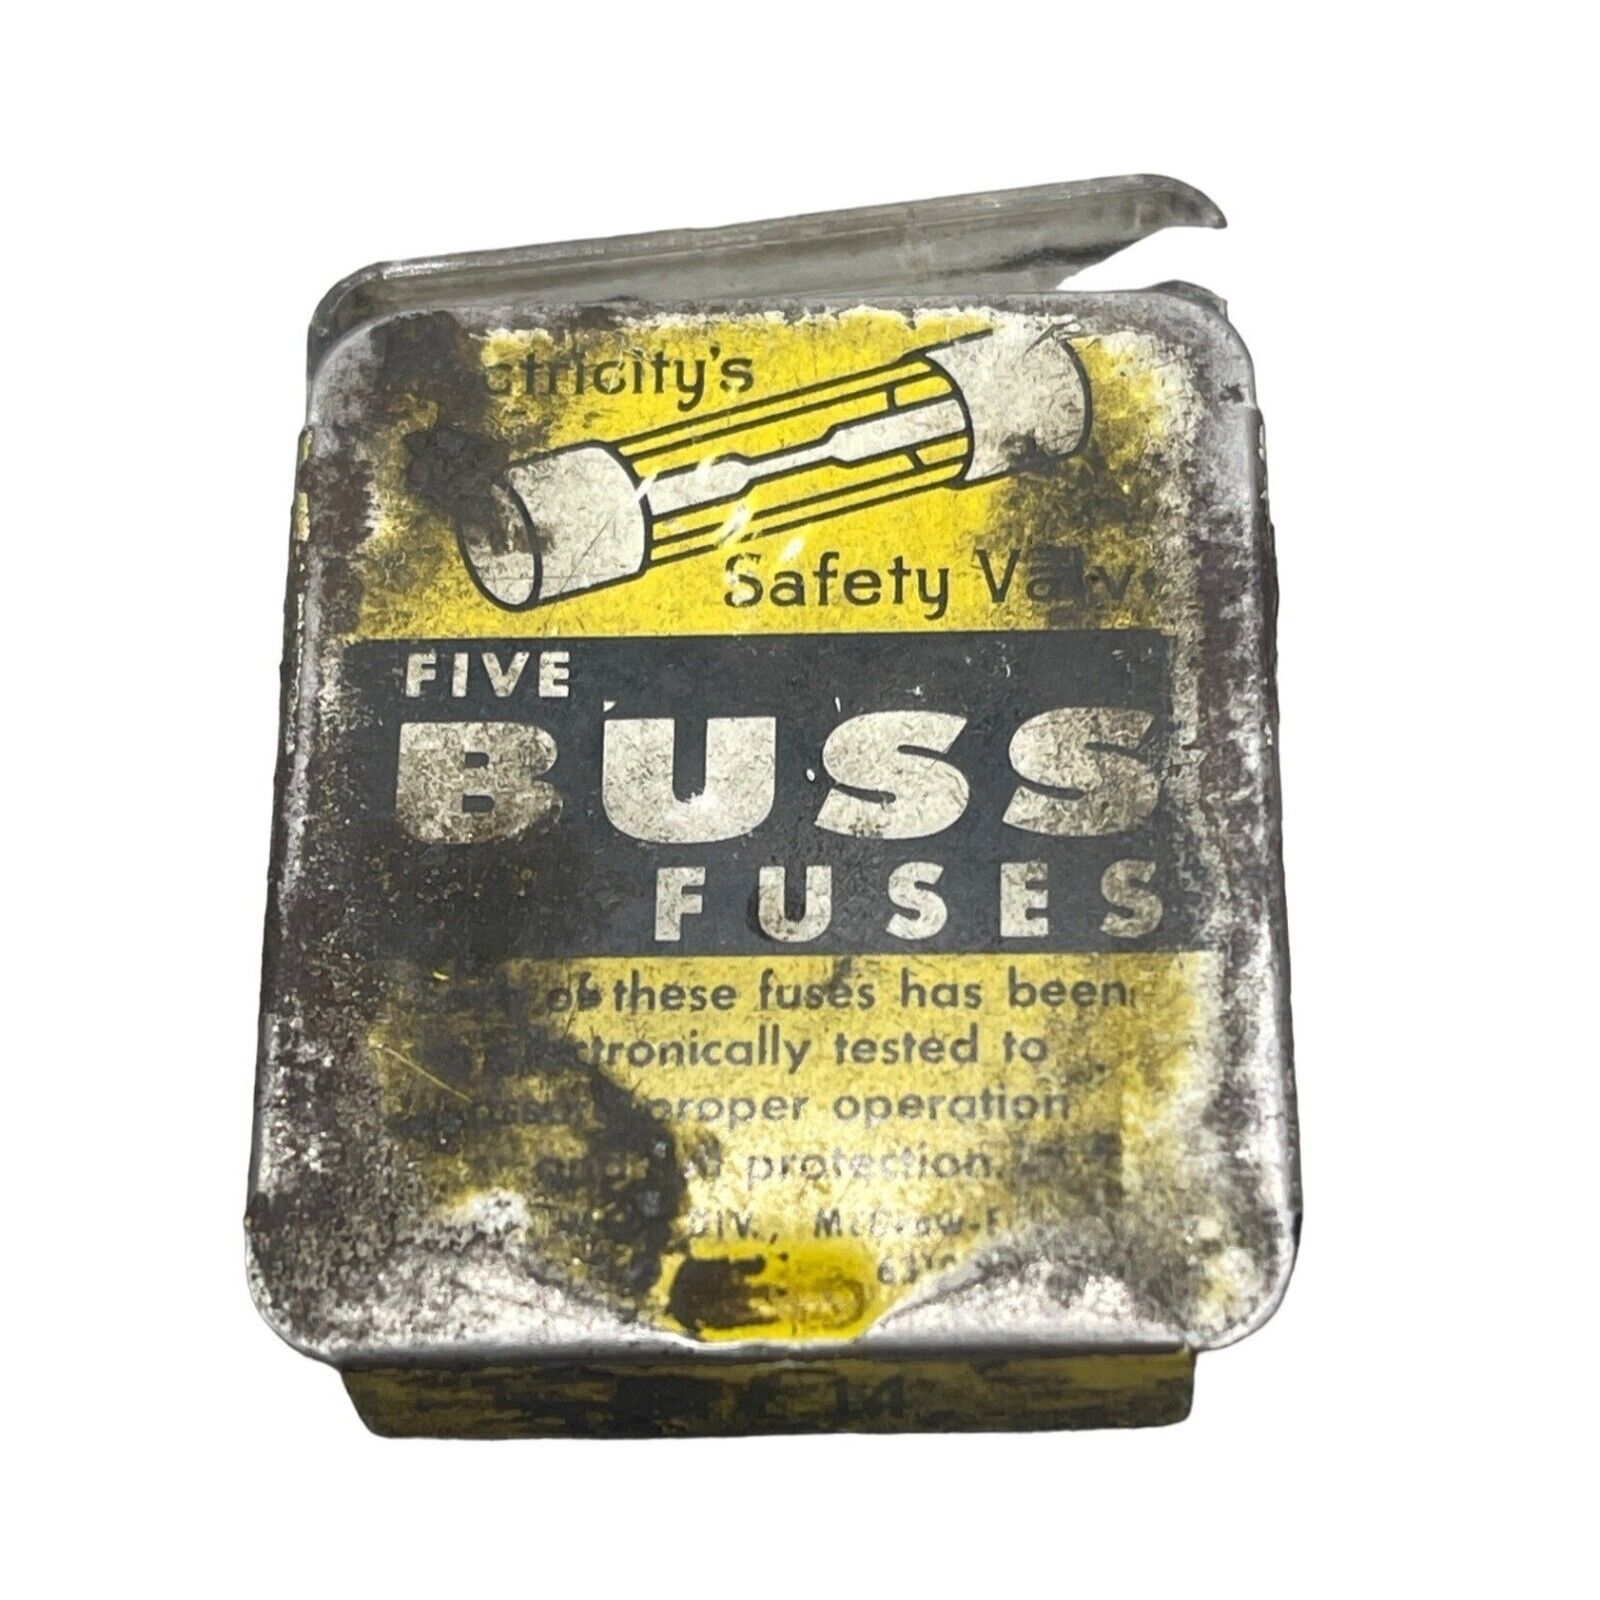 vintage buss fuses fse 14 set of 6 fuses yellow metal box READ